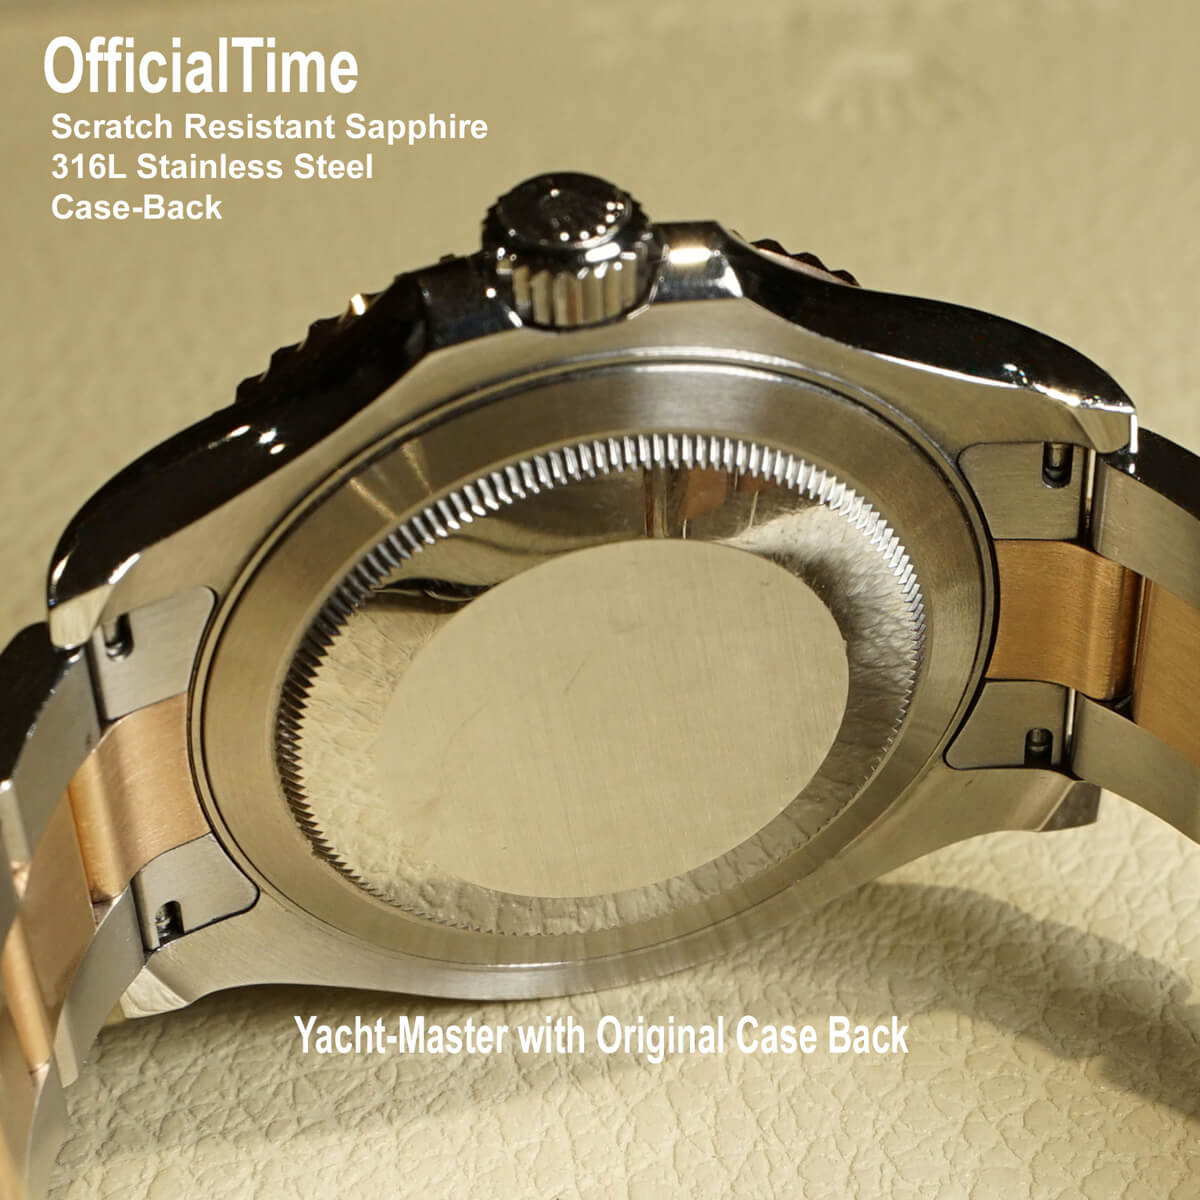 OfficialTime's - Rolex with Original Case Back